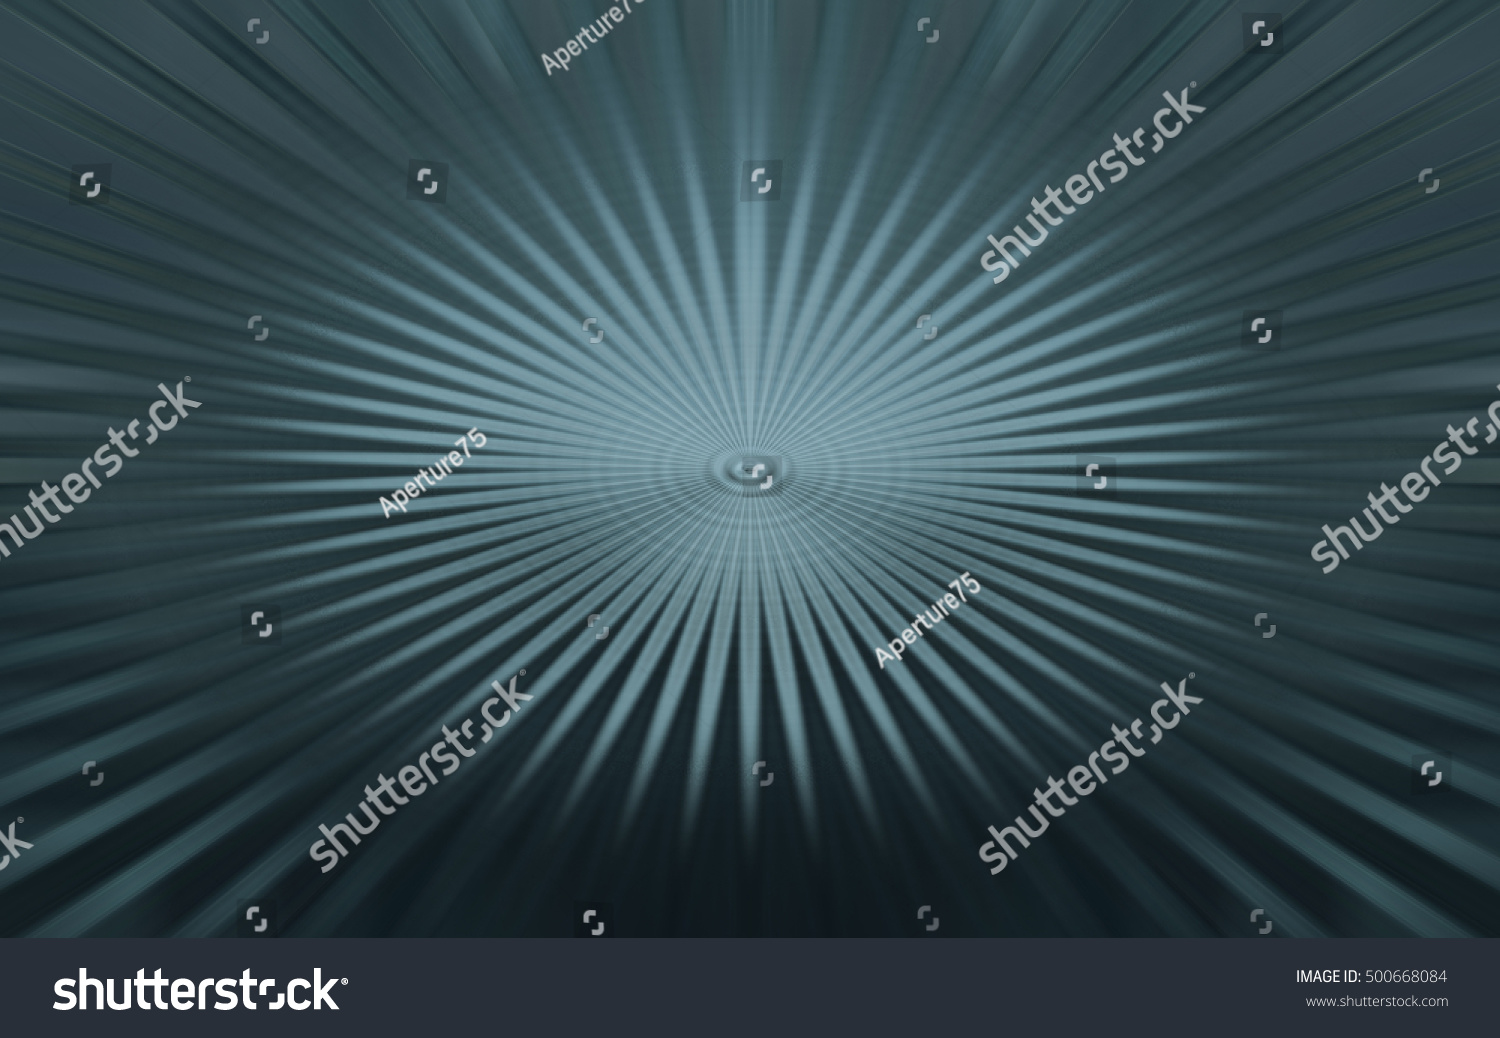 Zoom Background Bubble Backdrop Stock Illustration 500668084 | Shutterstock